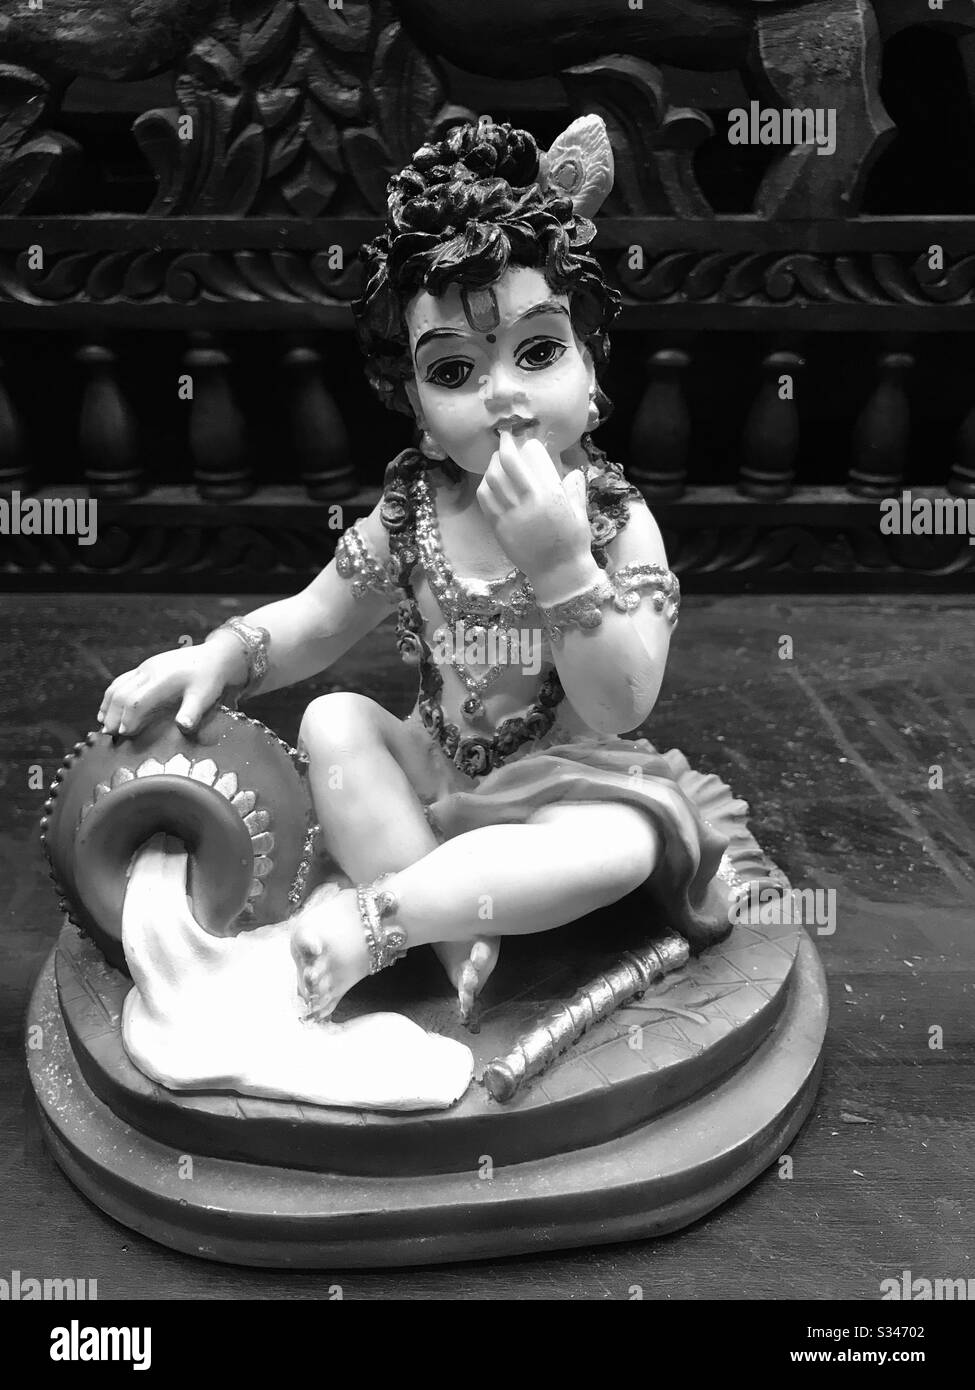 Baby Krishna eating butter- cute small wax statue found In a handicrafts shop in Little India Arcade, Singapore-Hindu God Sri Krishna-Janmashtami-Lord shri Krishnan - Soulful Love of God-black & white Stock Photo